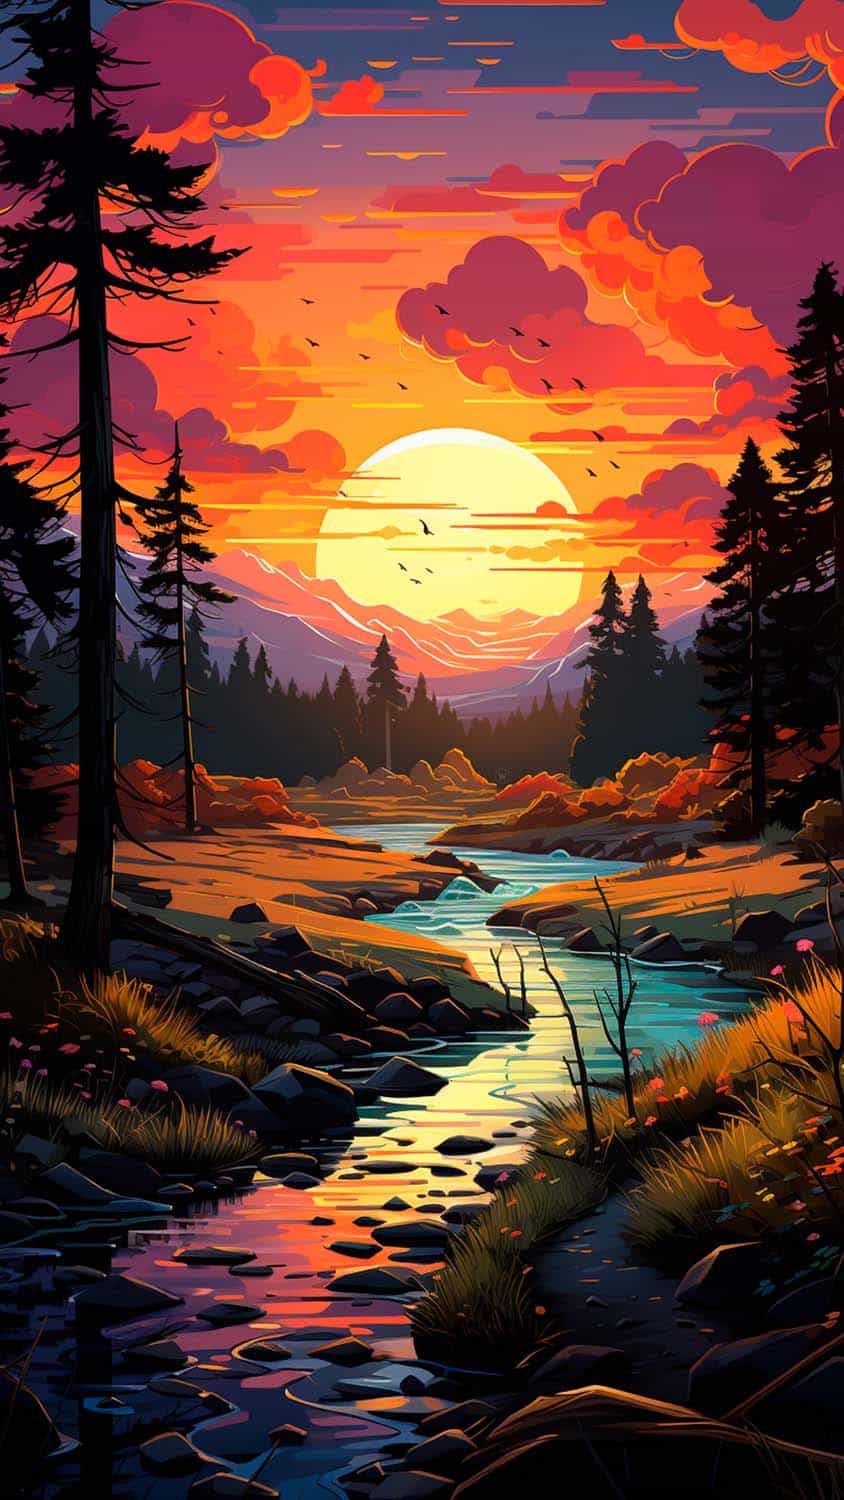 Landscape Sunrise River iPhone Wallpaper 4K